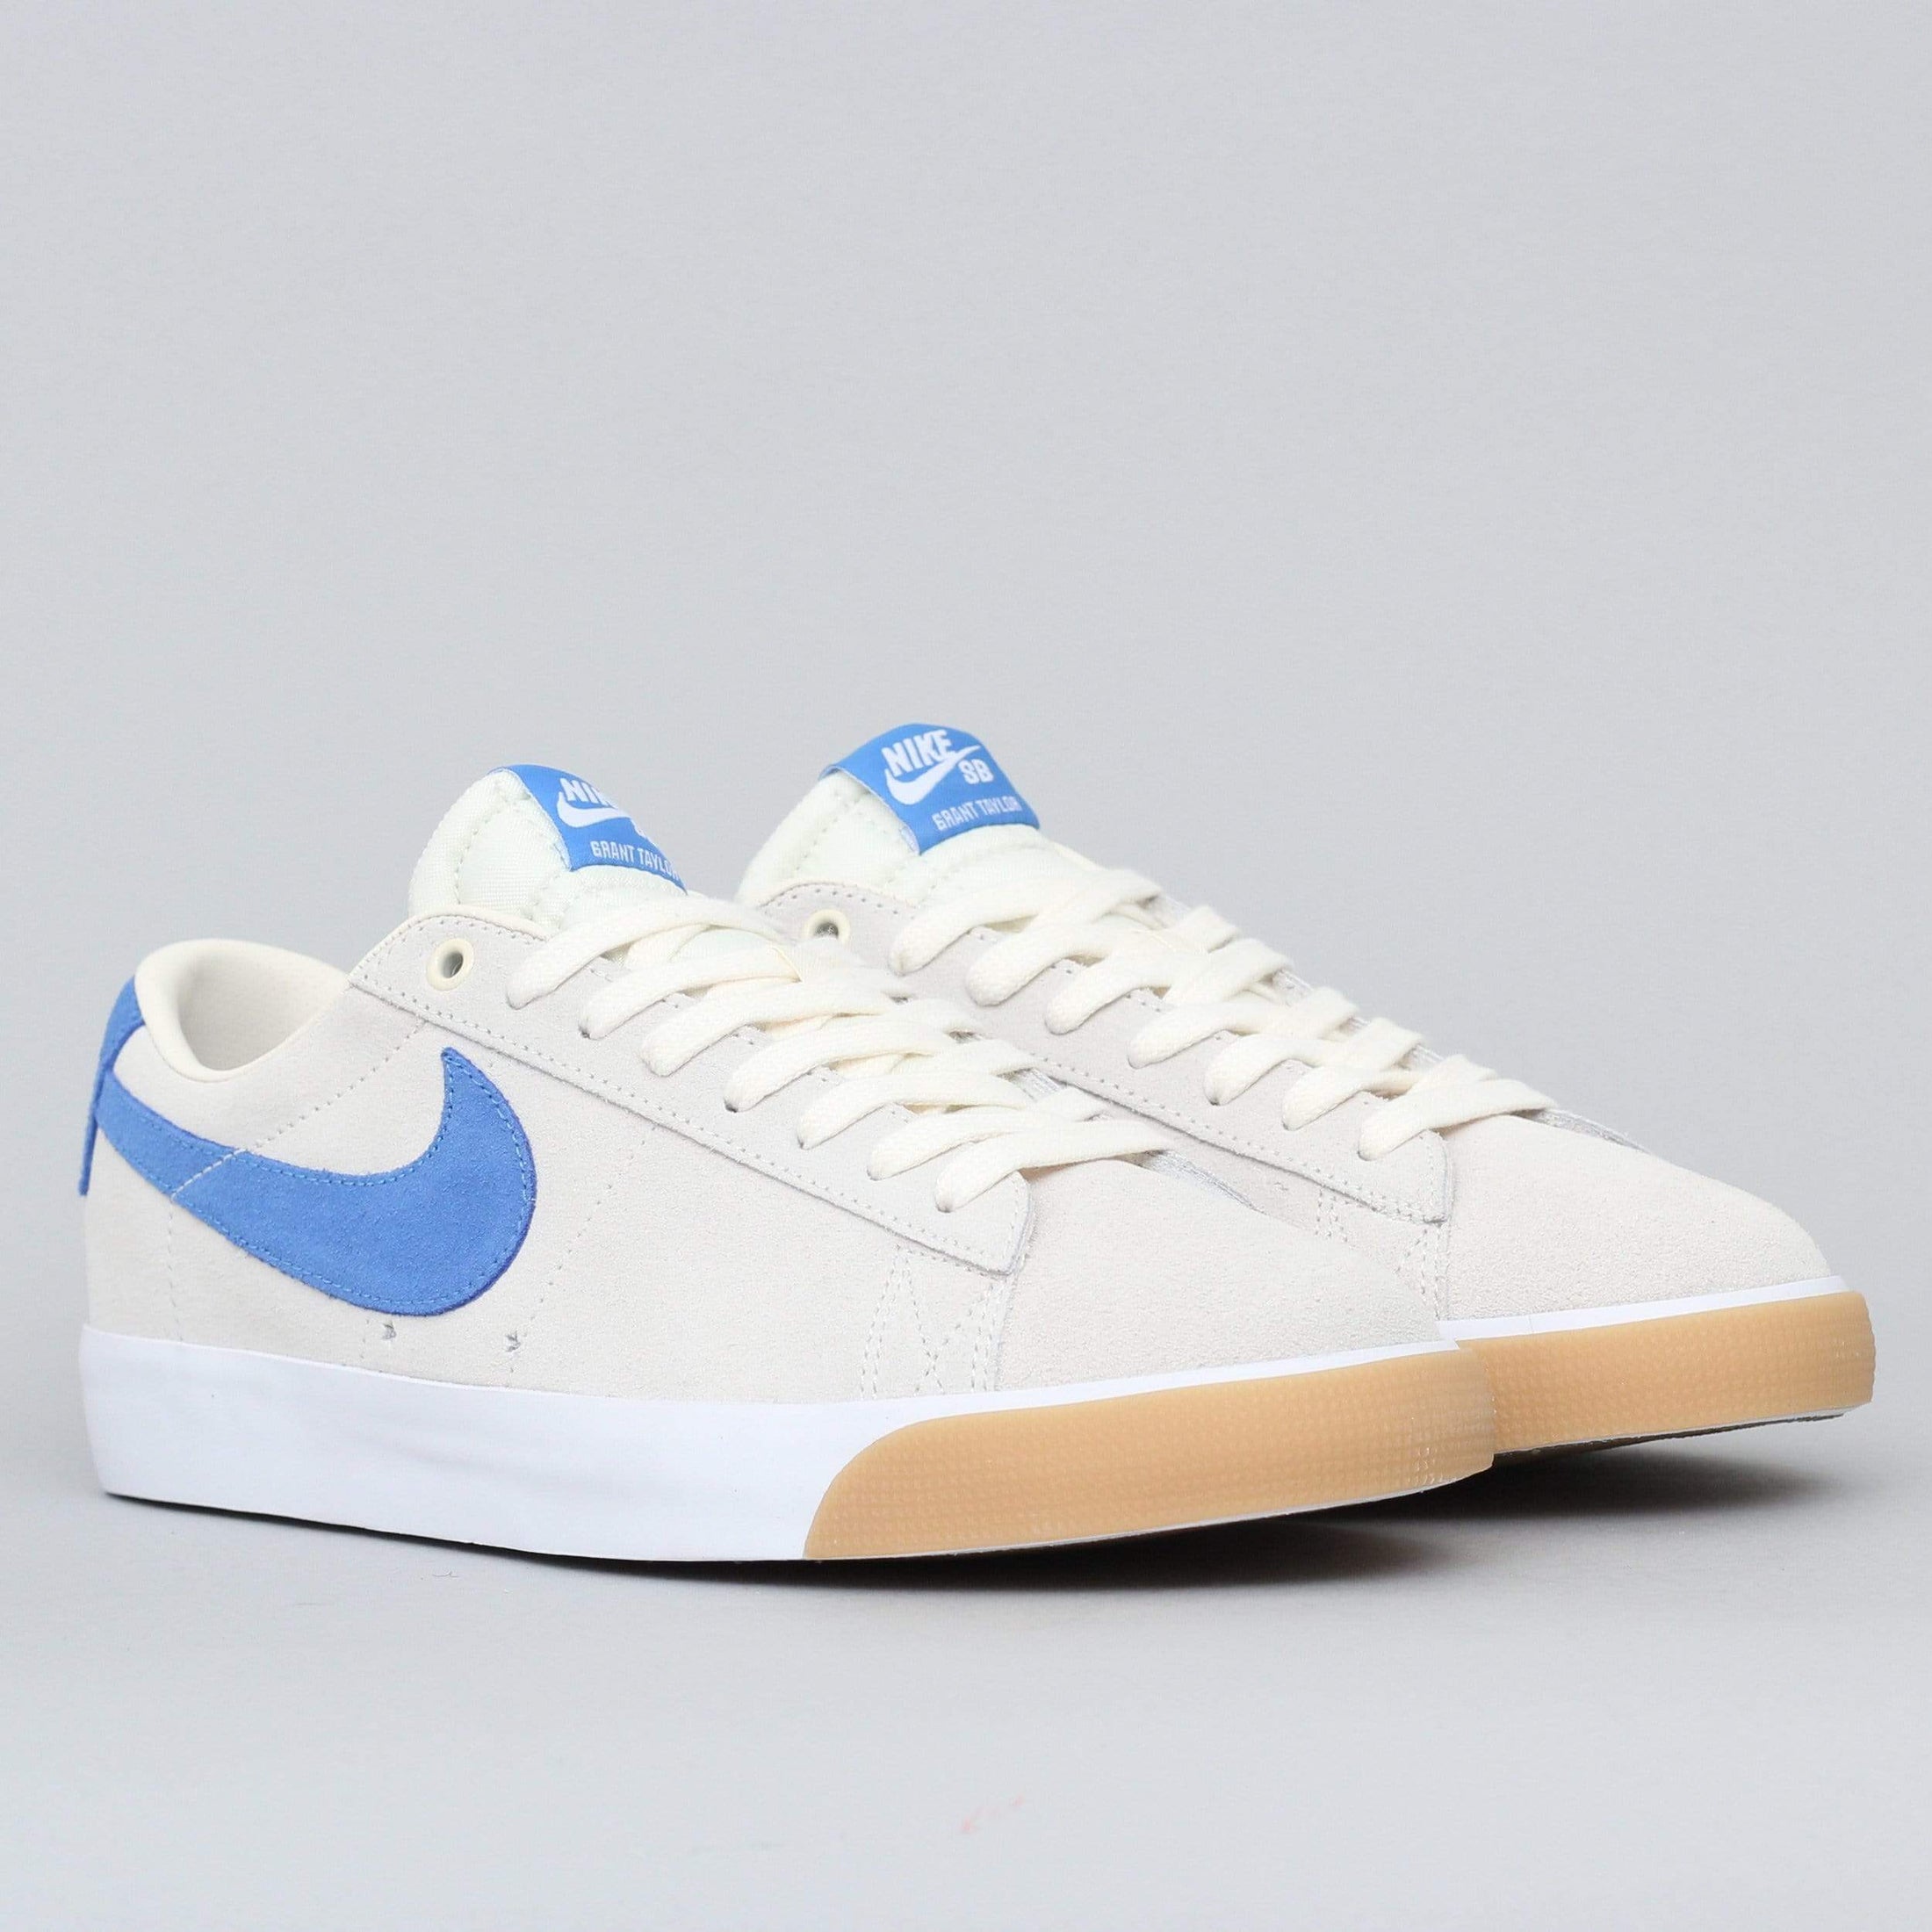 Nike SB Blazer Low GT Shoes Pale Ivory / Pacific Blue - White